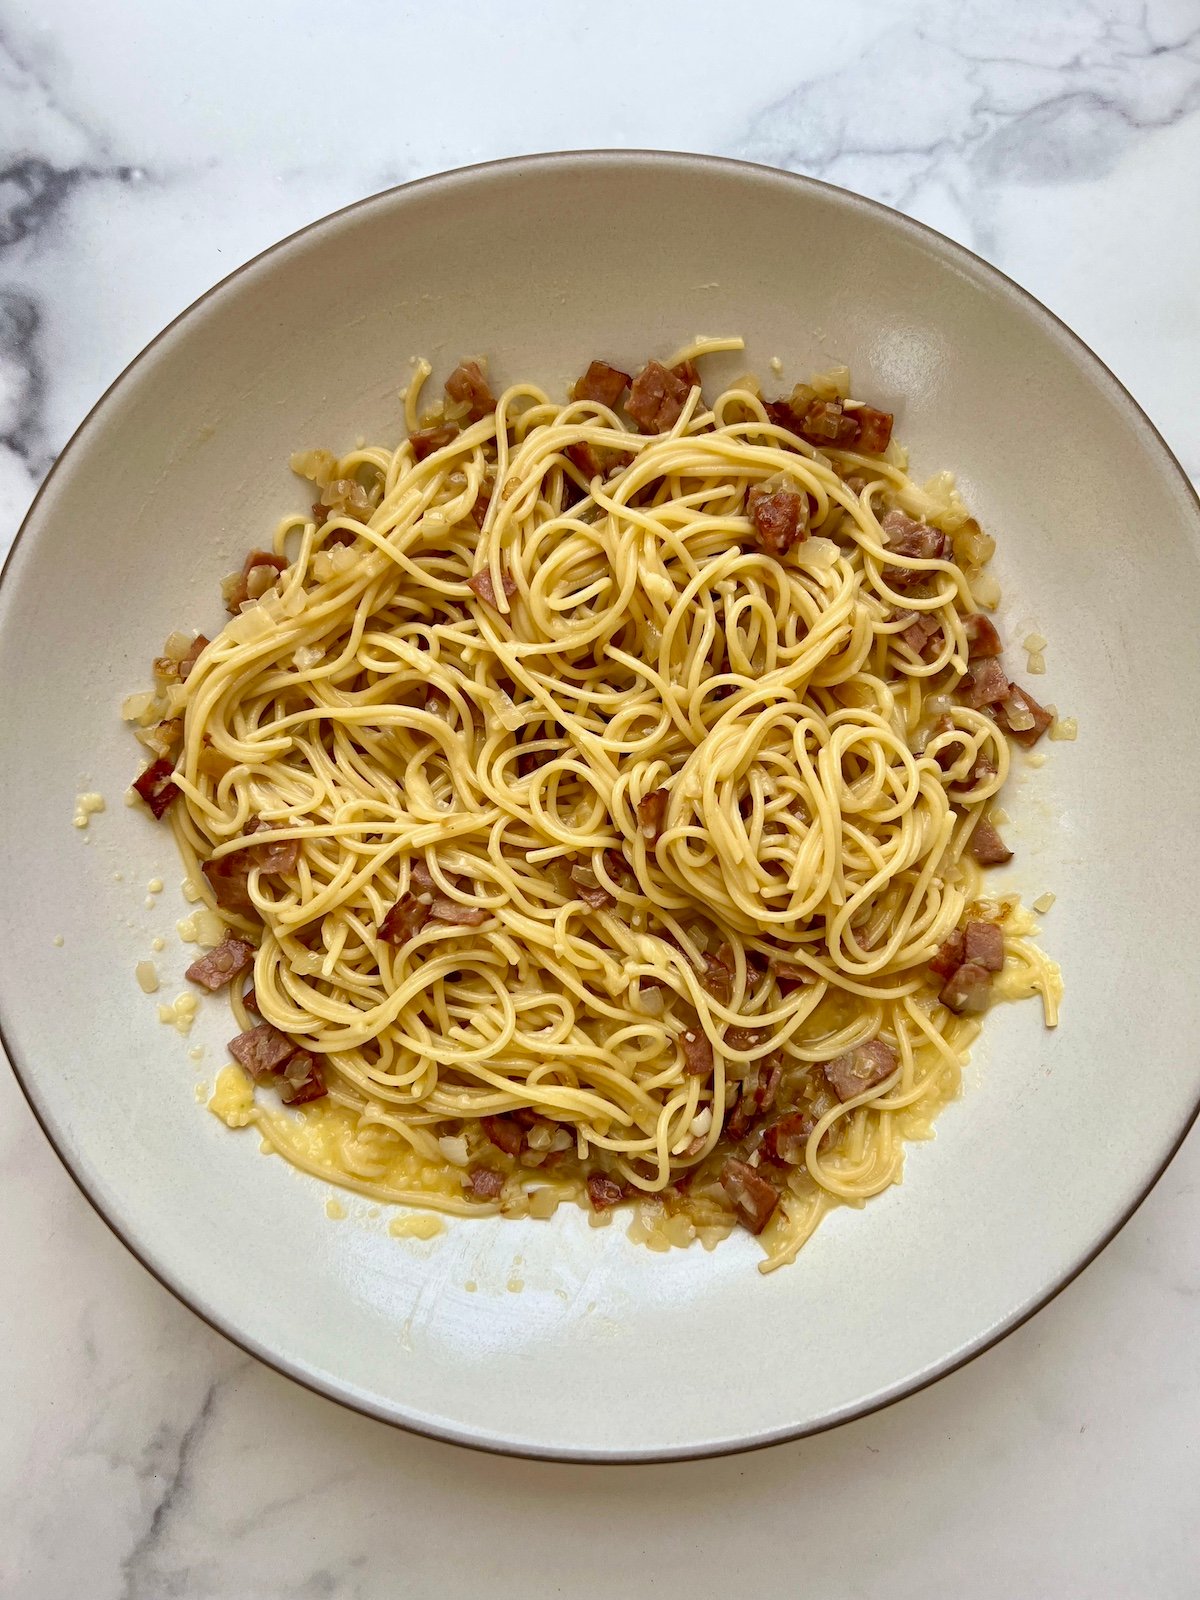 Lightened up spaghetti carbonara on serving platter.